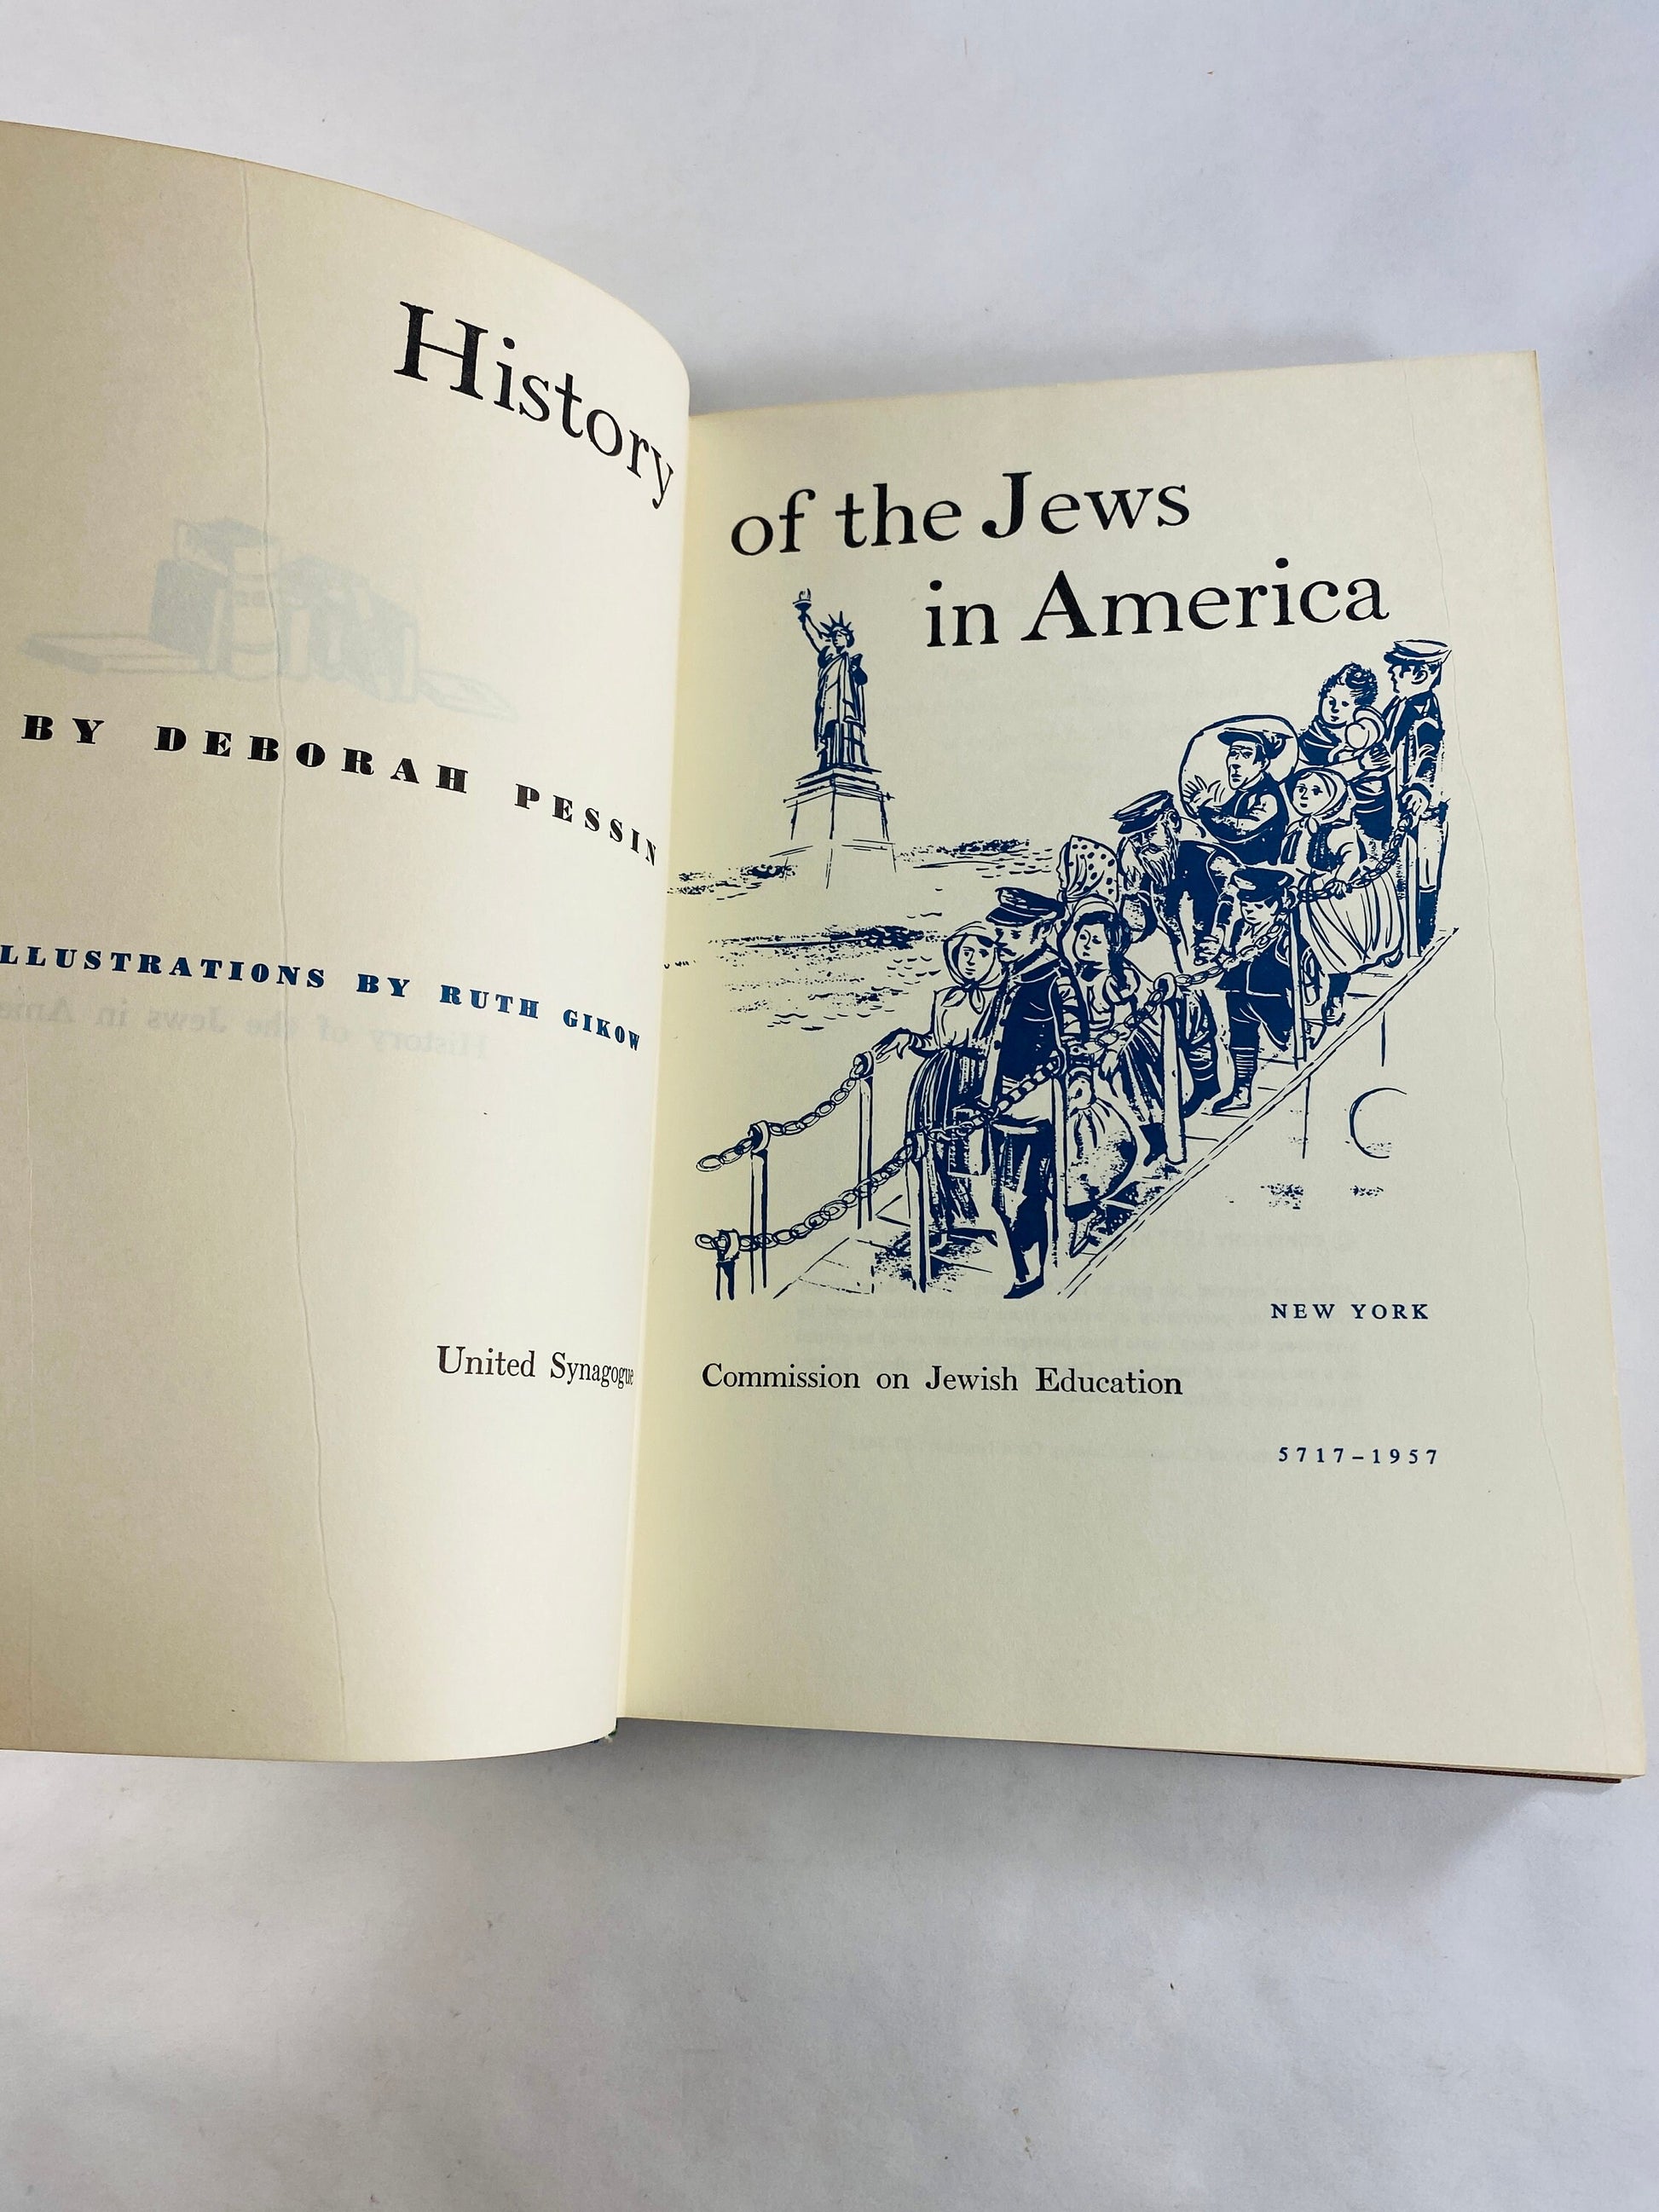 Jews in America vintage book by Deborah Pessin circa 1957 Jewish American intellectual, political structure.